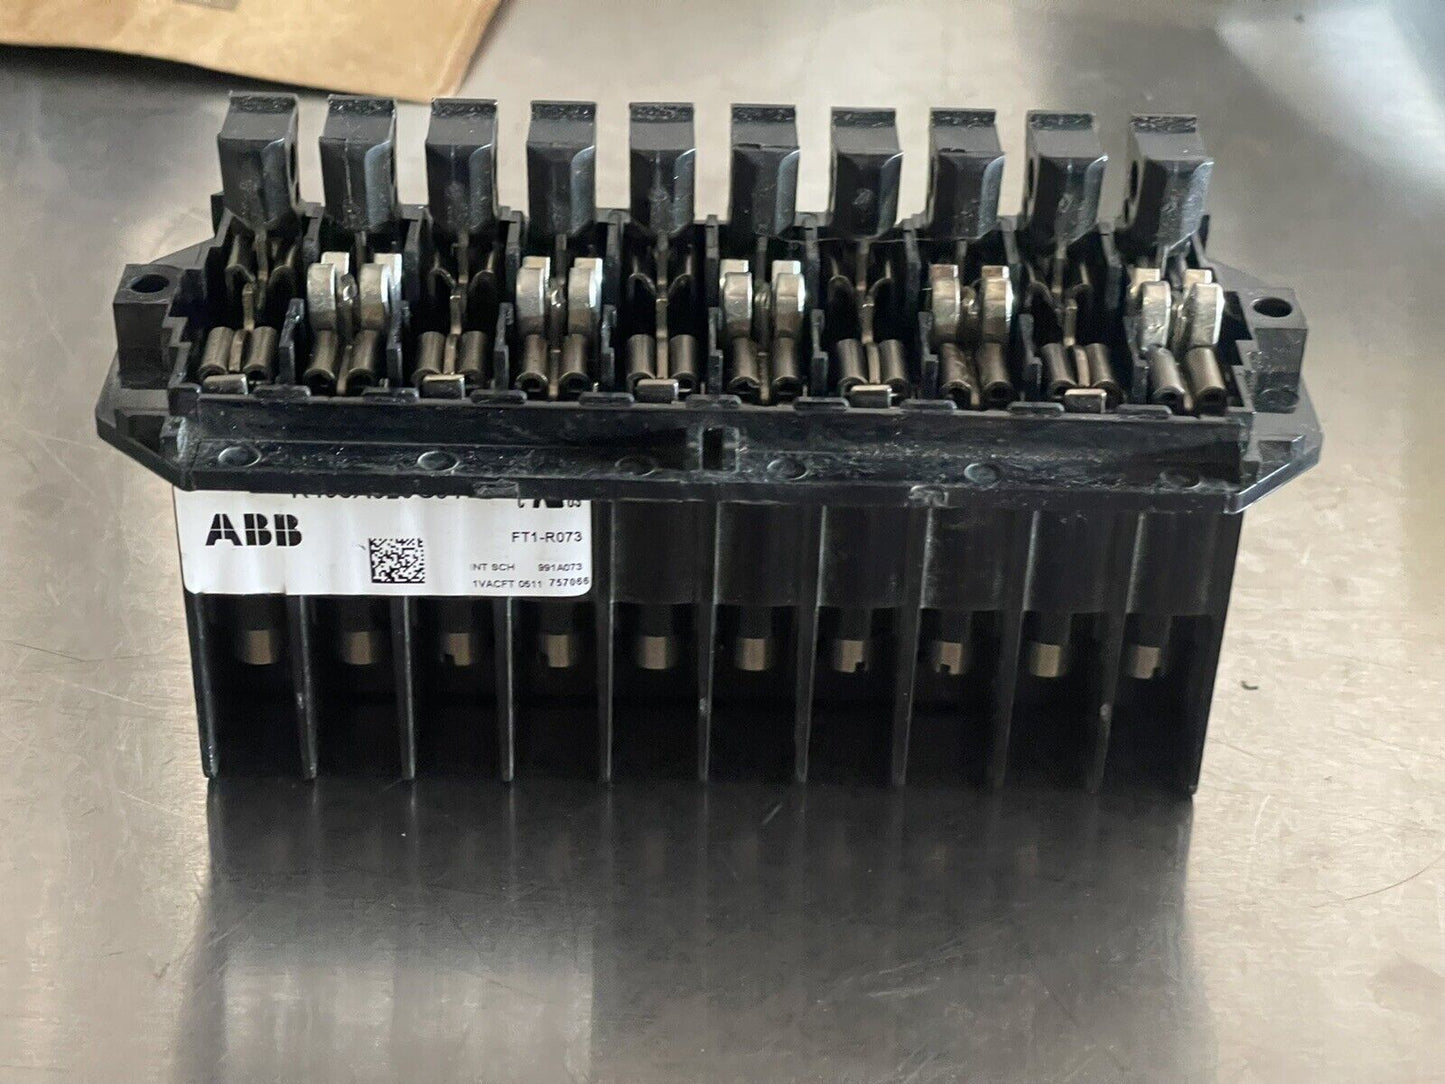 ABB R498A020G01 FLEXITEST 10-POLE TEST SWITCH (FT1-R073)